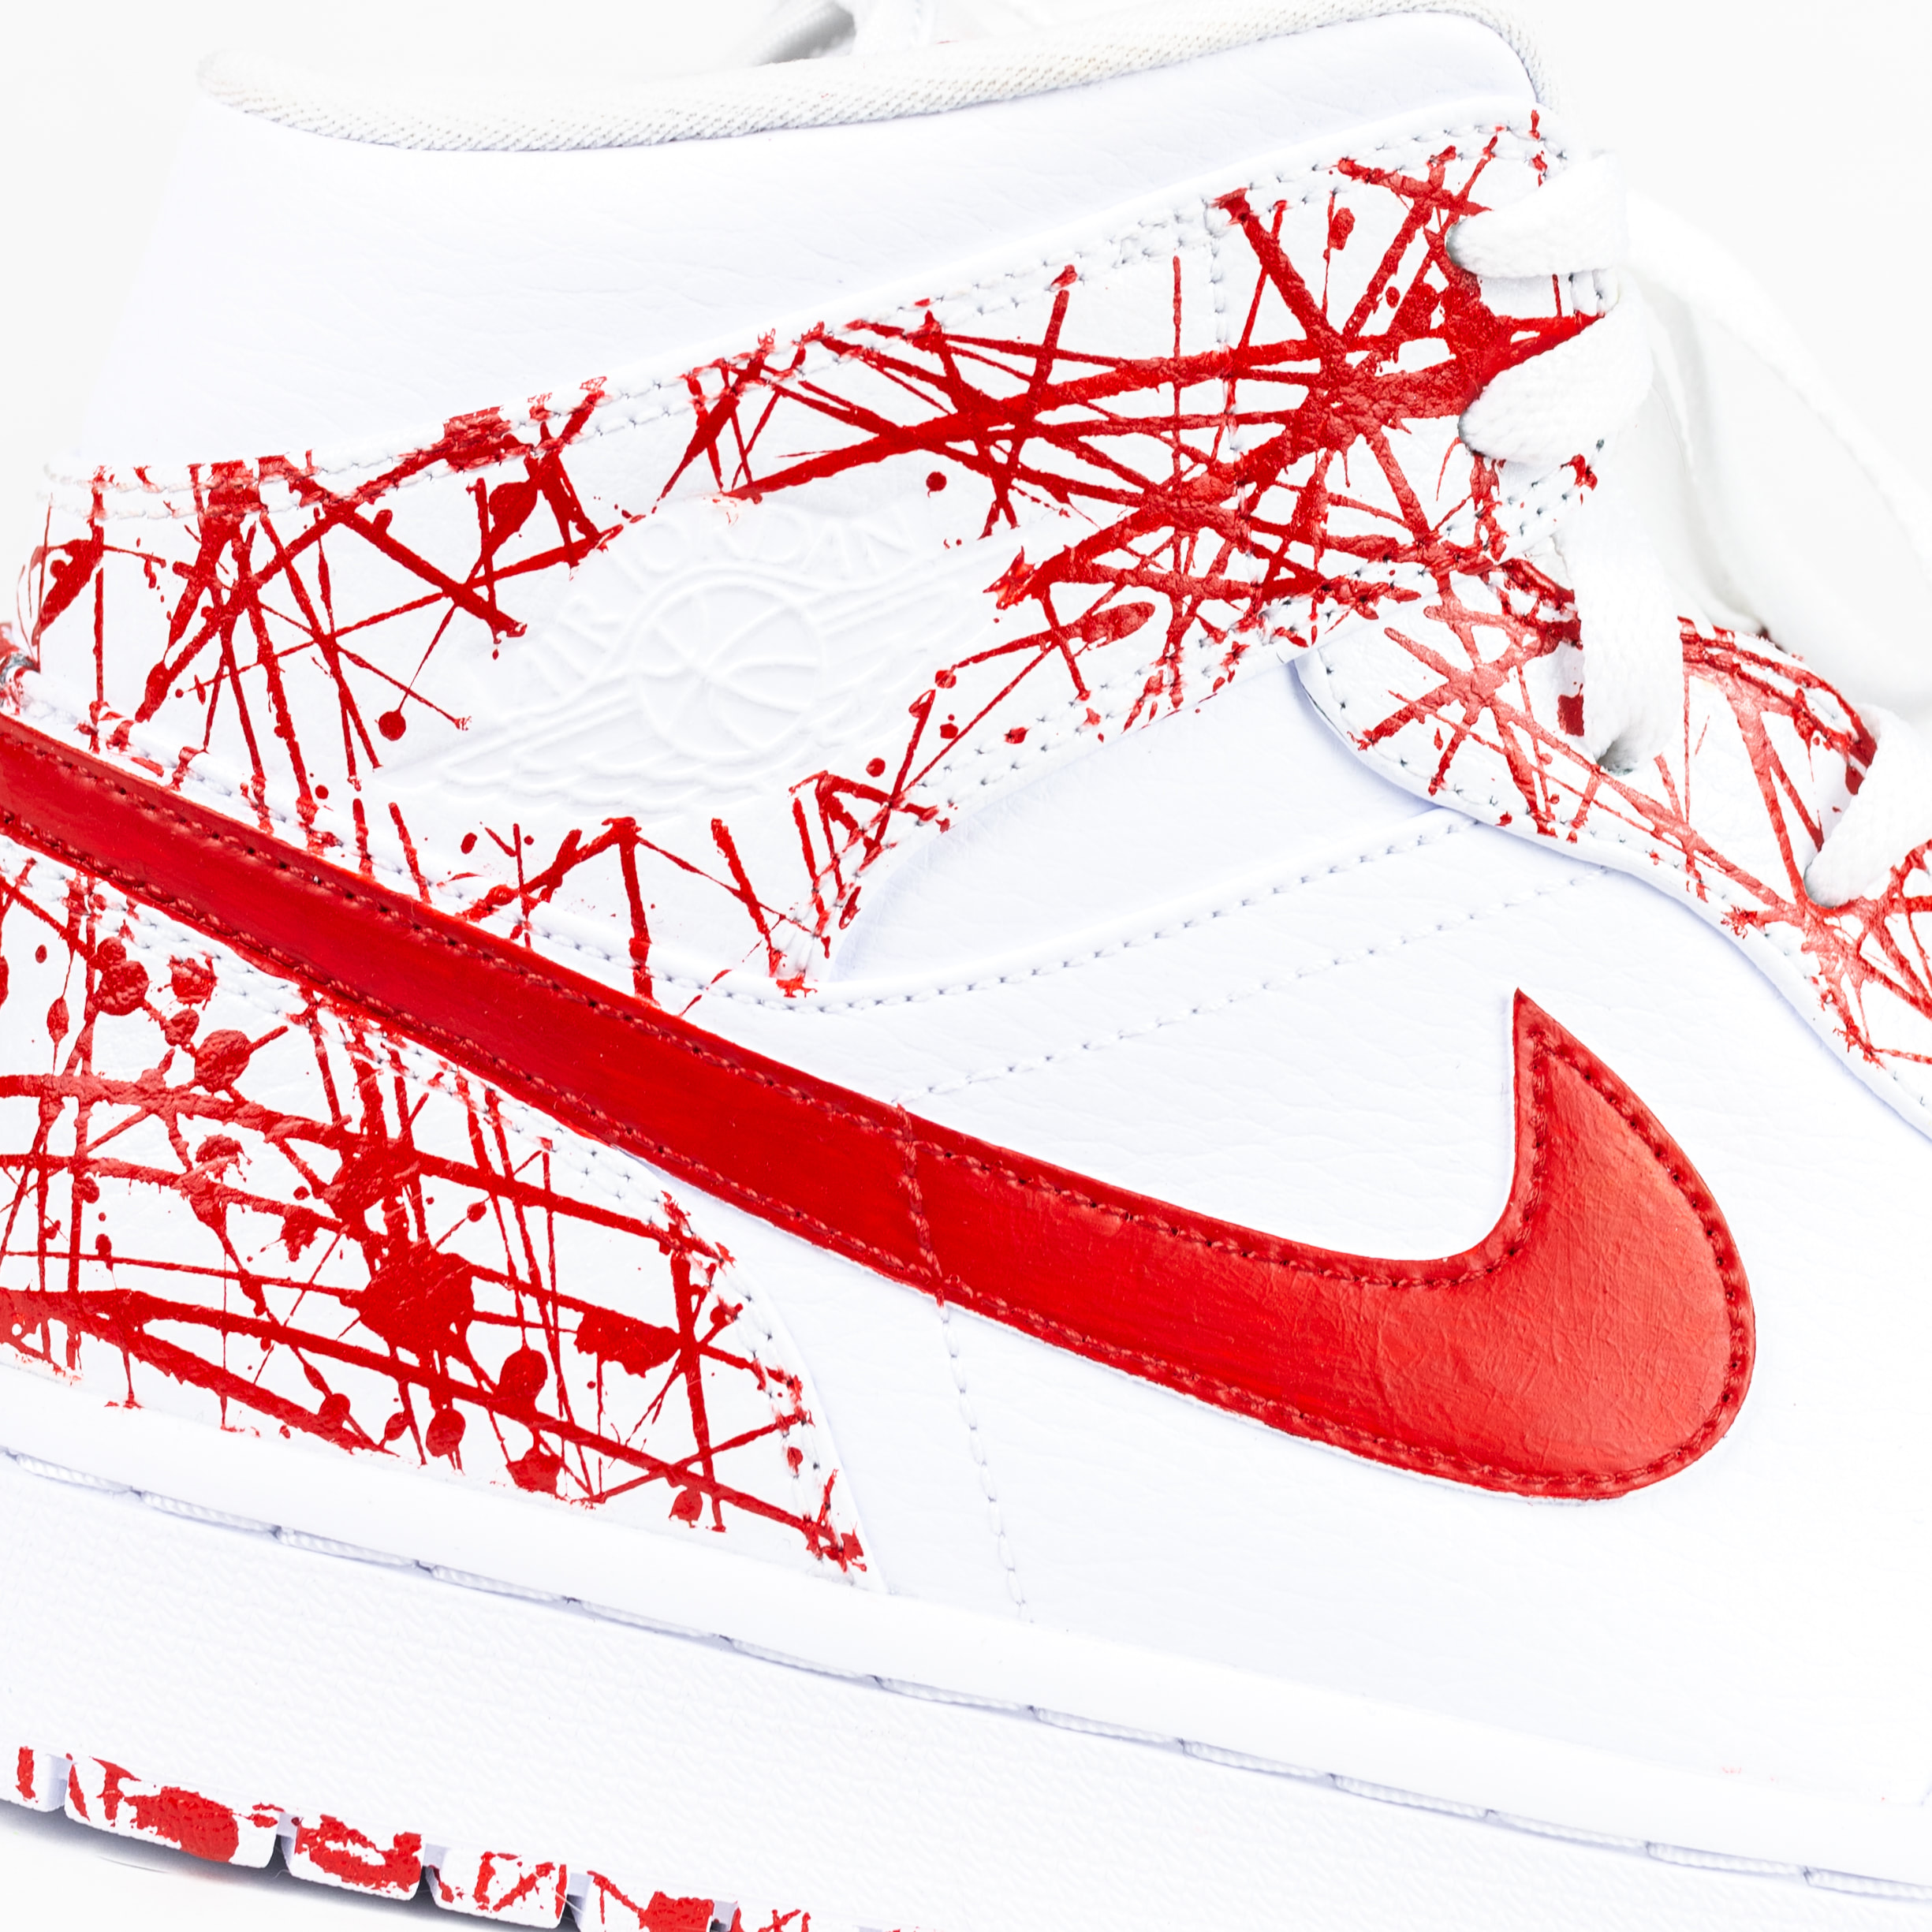 Nike Air Jordan 1 Mid Custom 'Red Pollocks' Edition